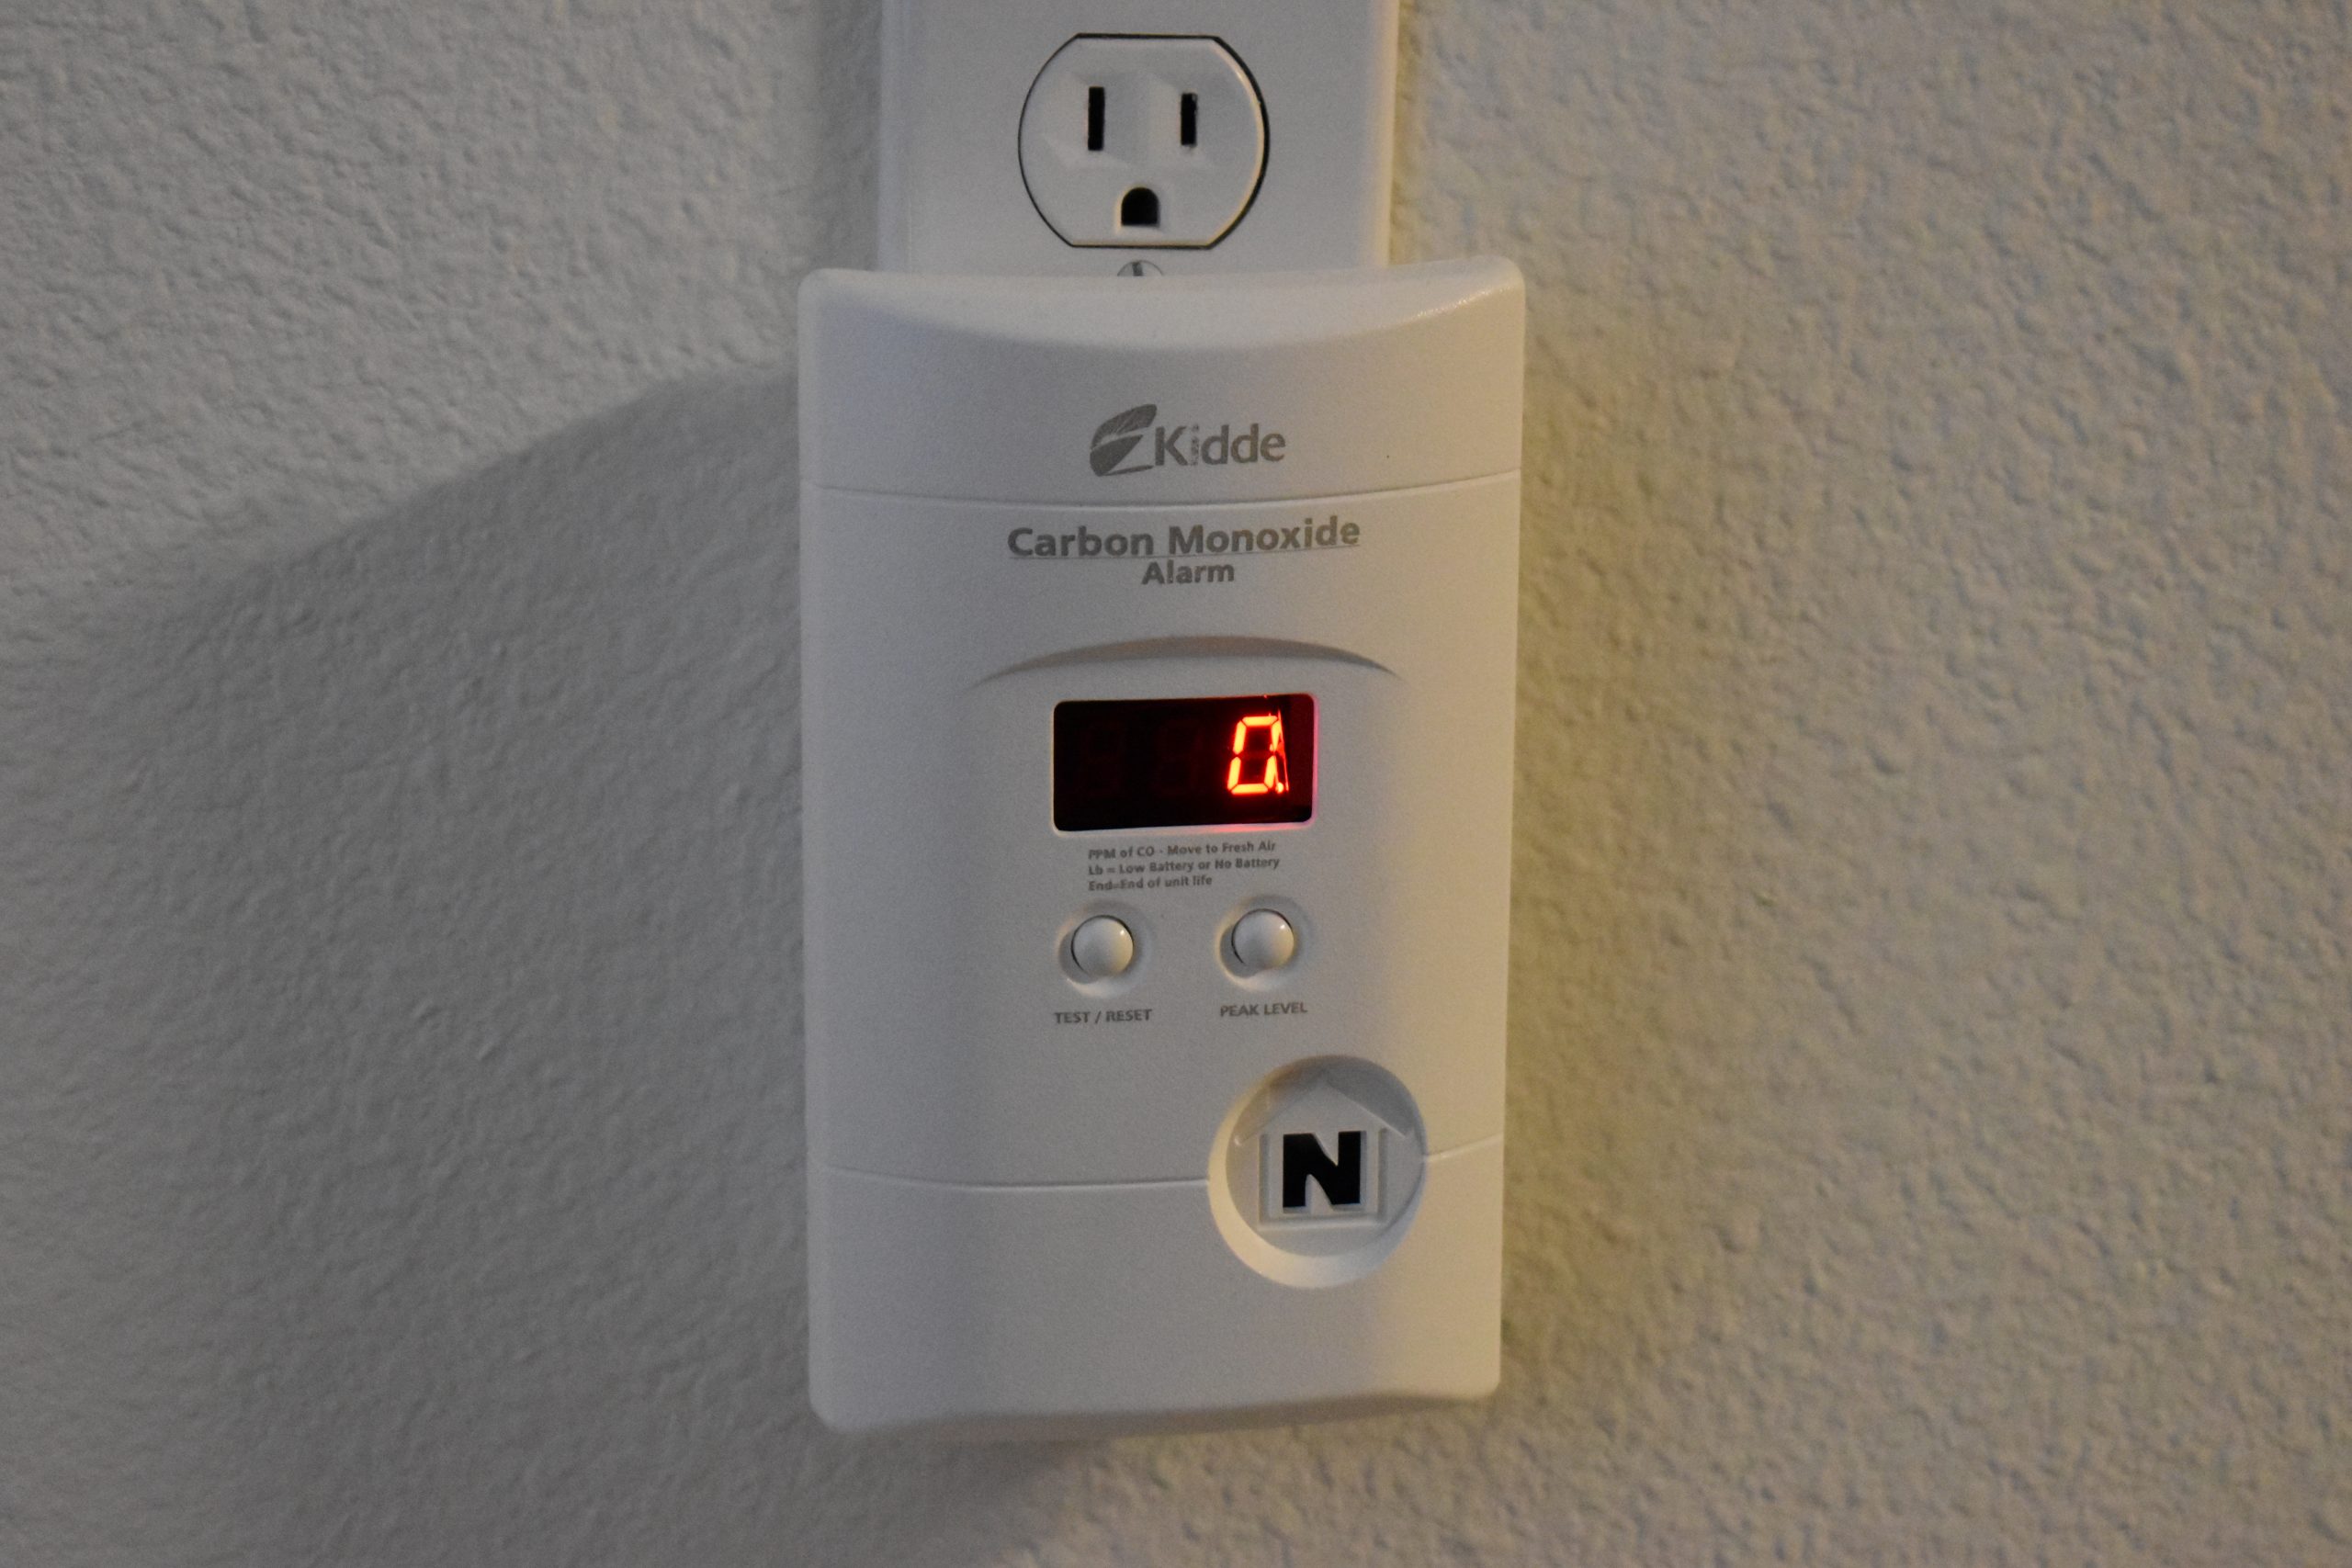 carbon monoxide detector plugged into outlet